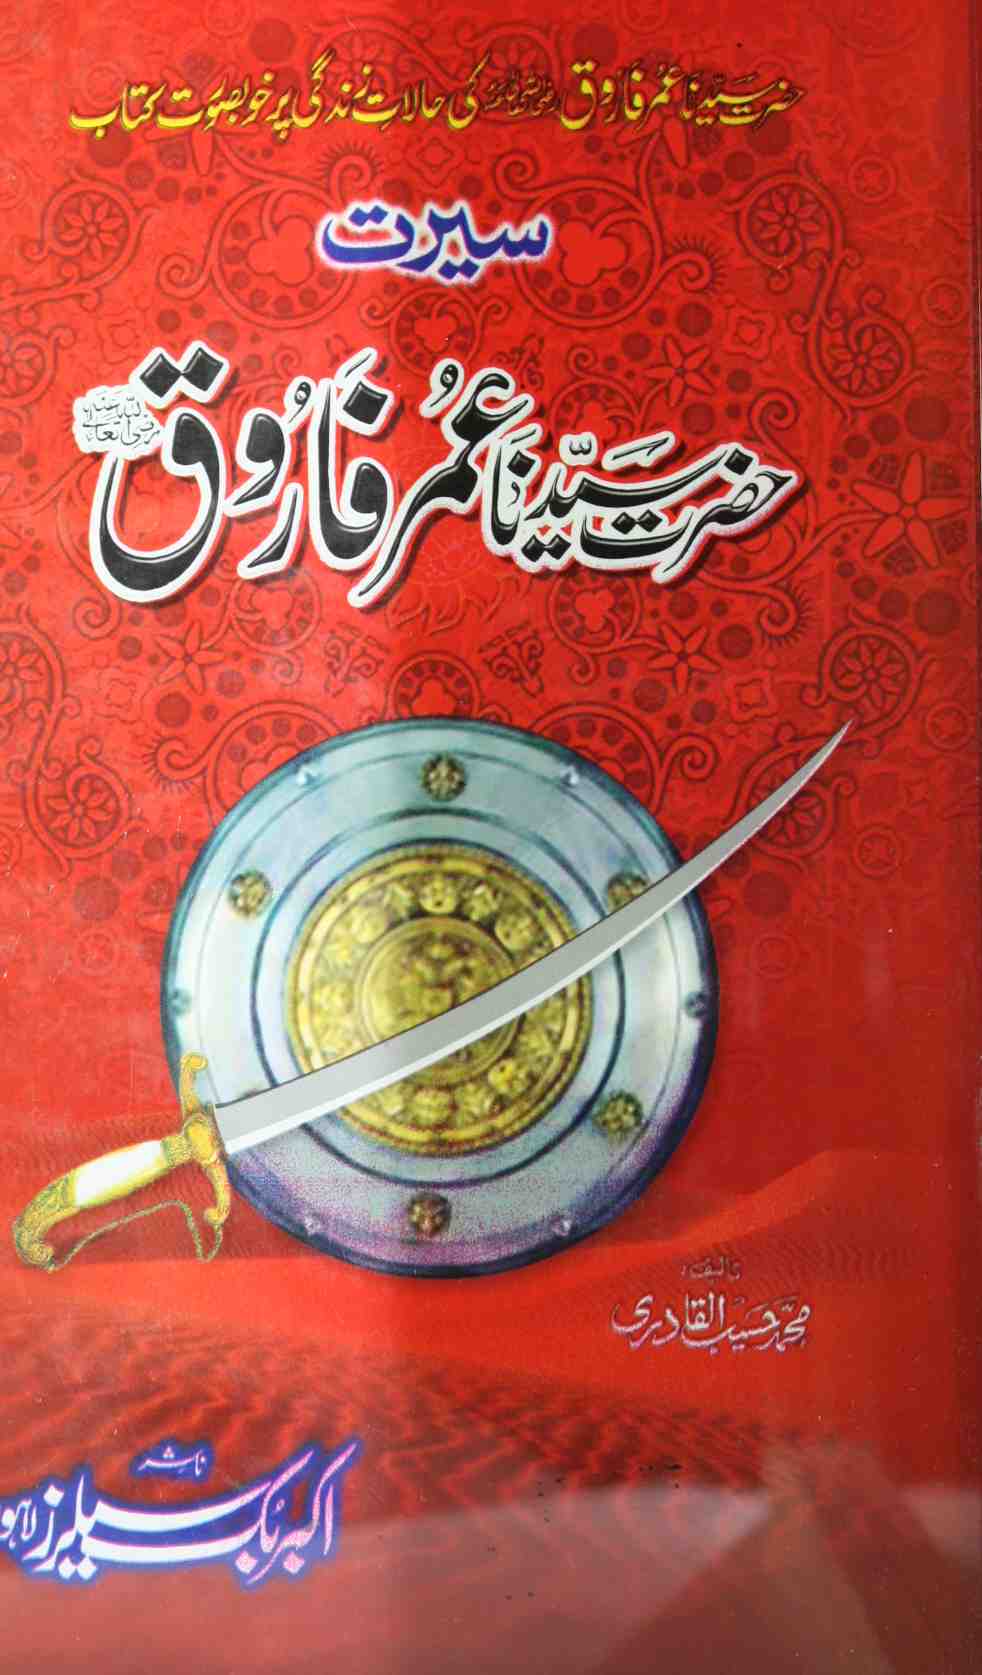 History Of Hazrat Umar Farooq Ra In Urdu Pdf Free Download